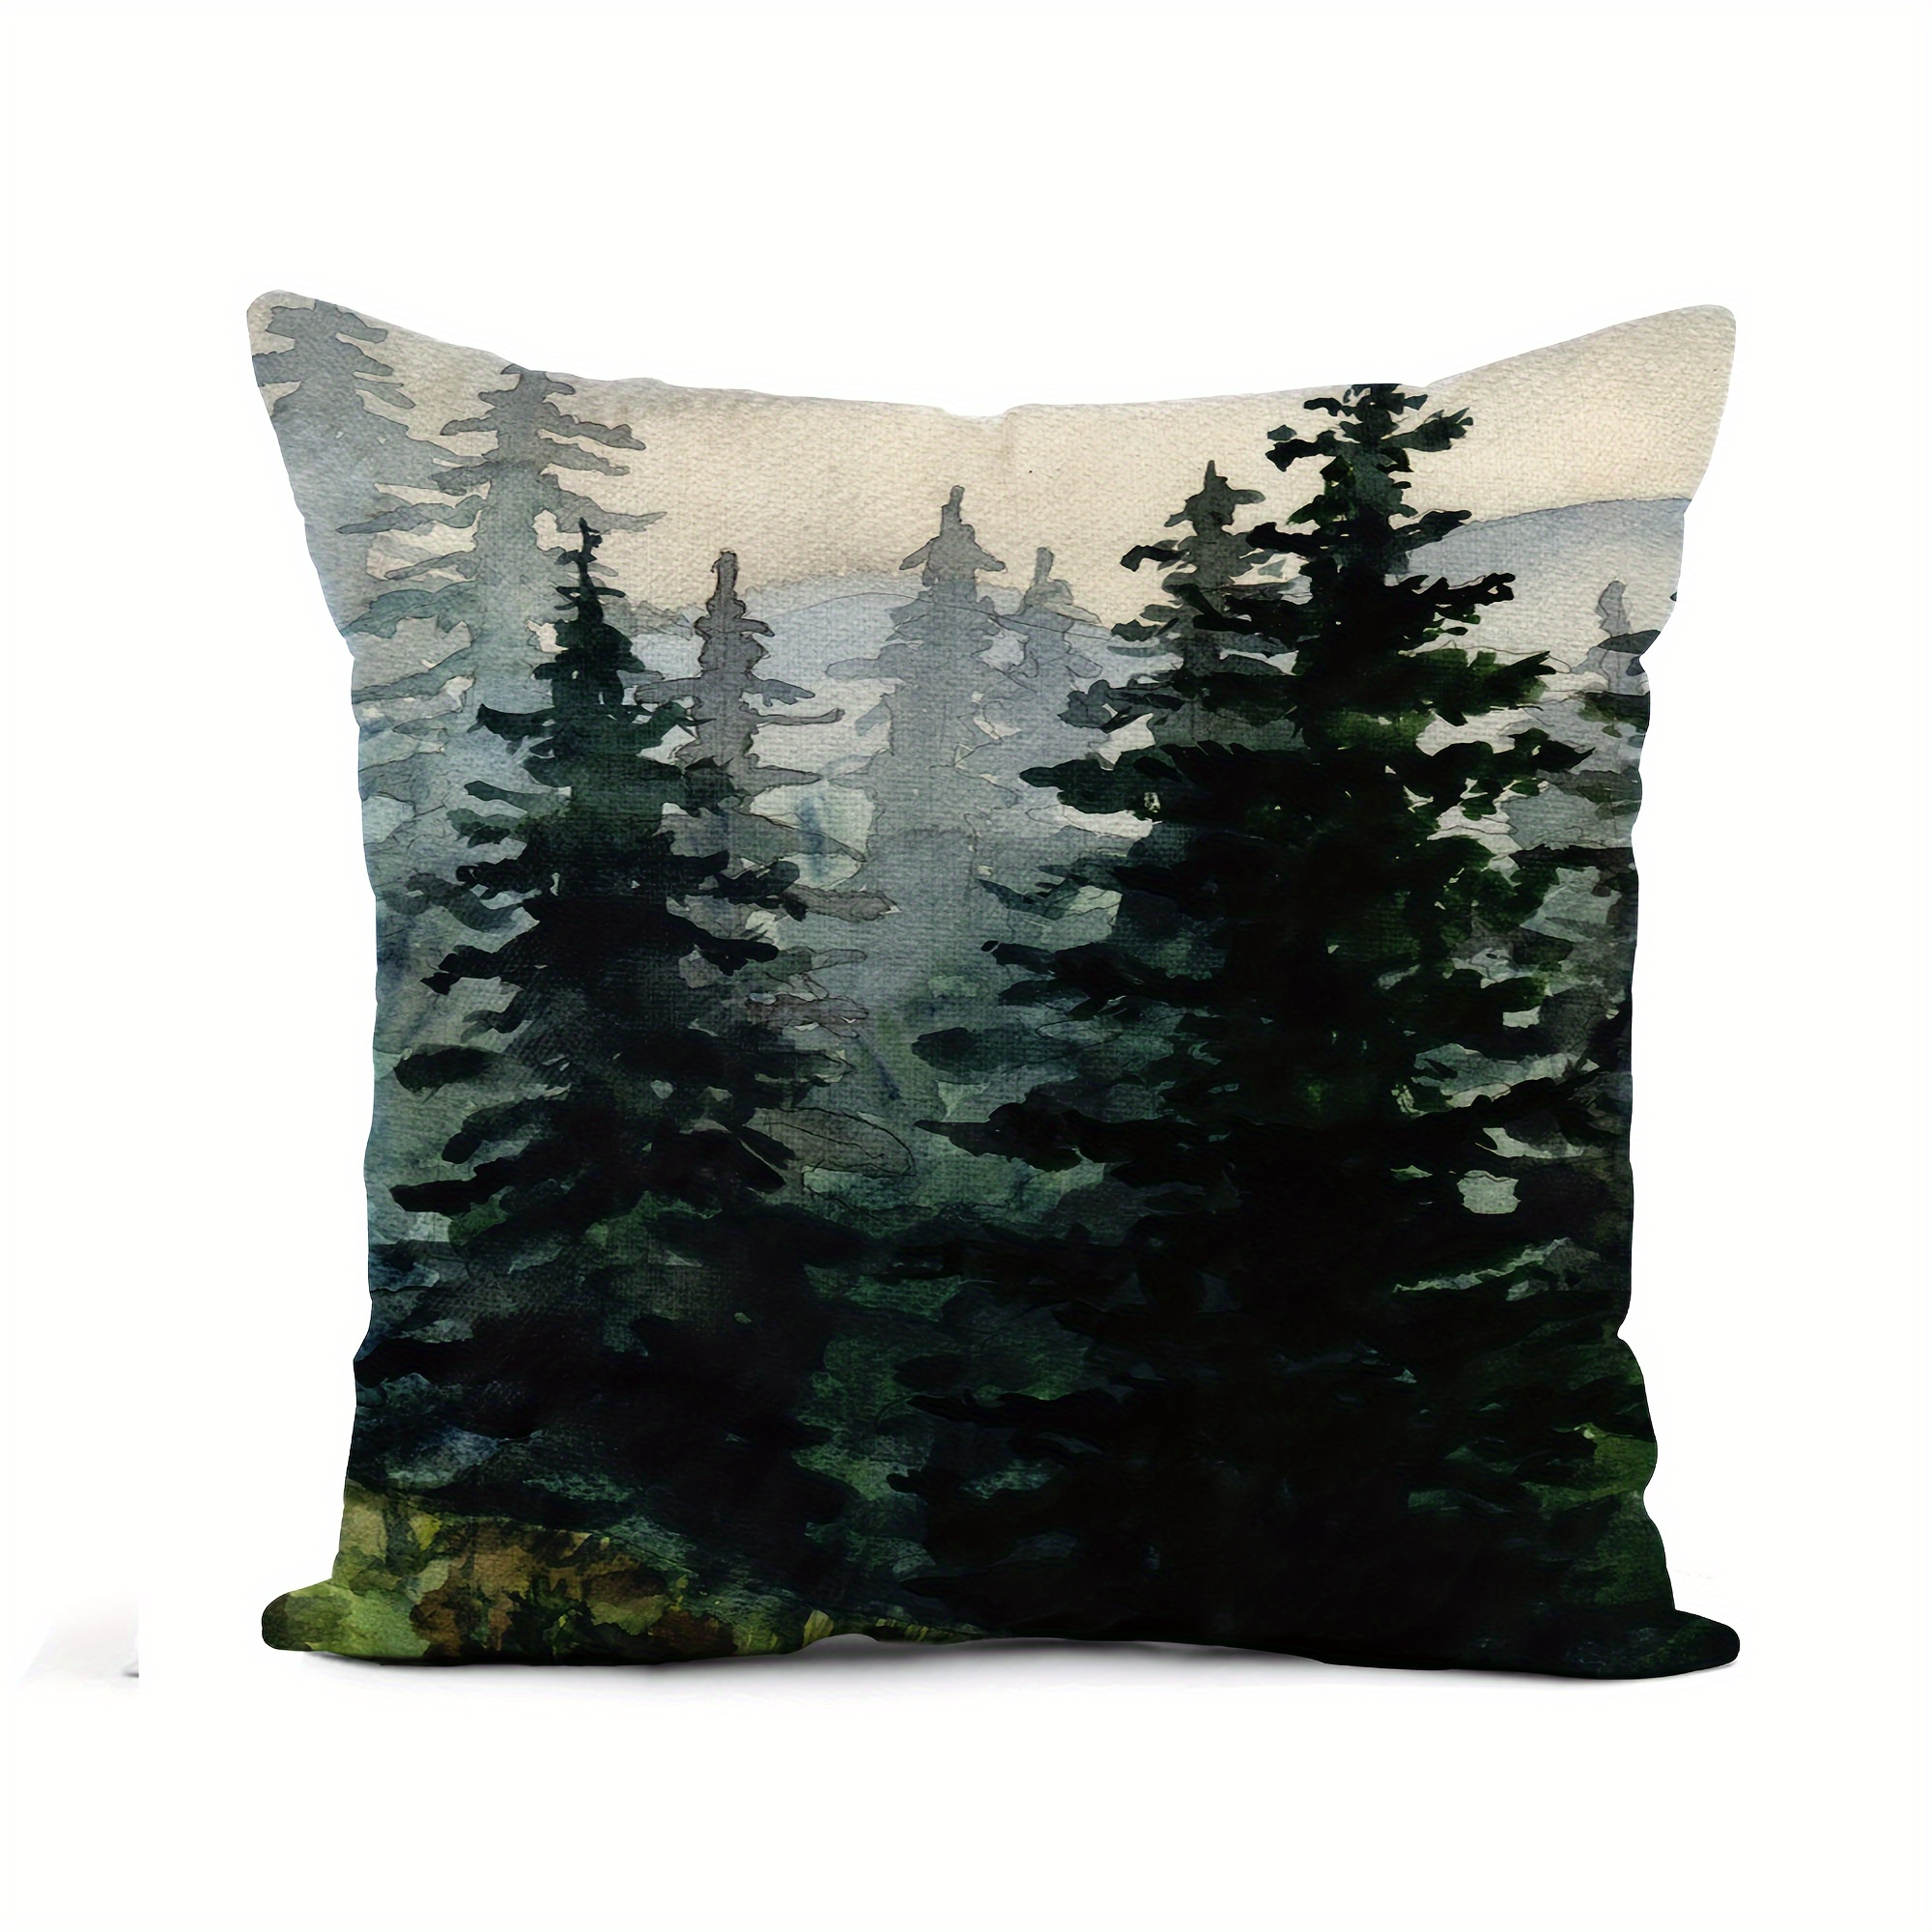 

1pc Throw Pillow Cover Watercolor Landscape Pine Forest Mountains Alaska Artistic Pillowcase Home Decor Square Pillow Case Cushion Cover Short Plush Decor 18x18 Inch No Pillow Core